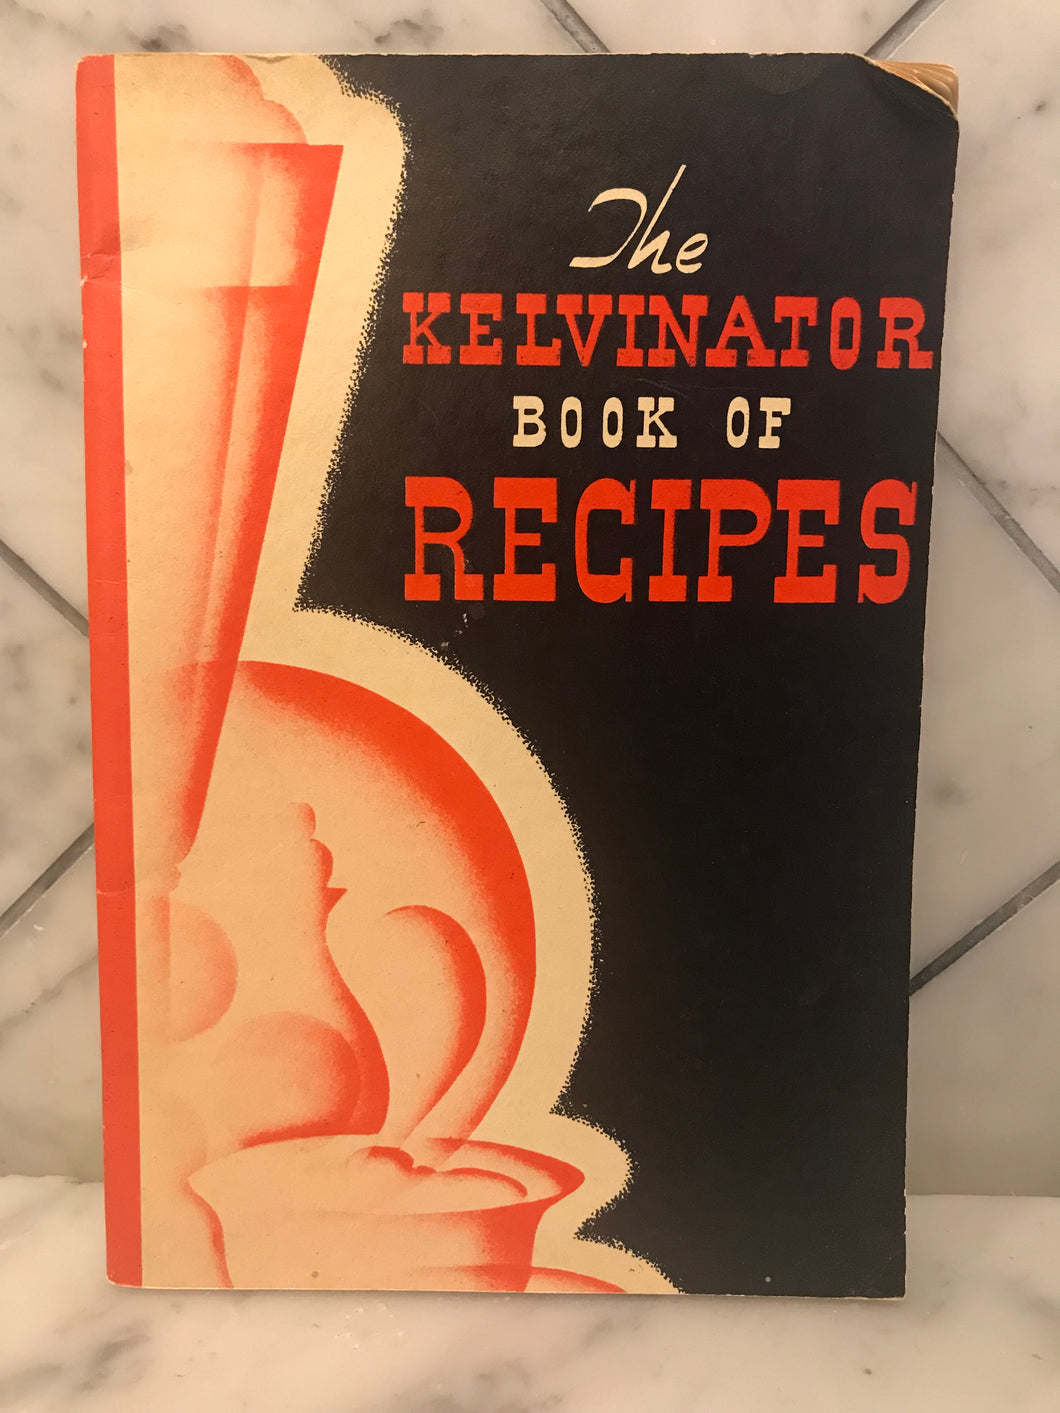 The Kelvinator Book of Recipes